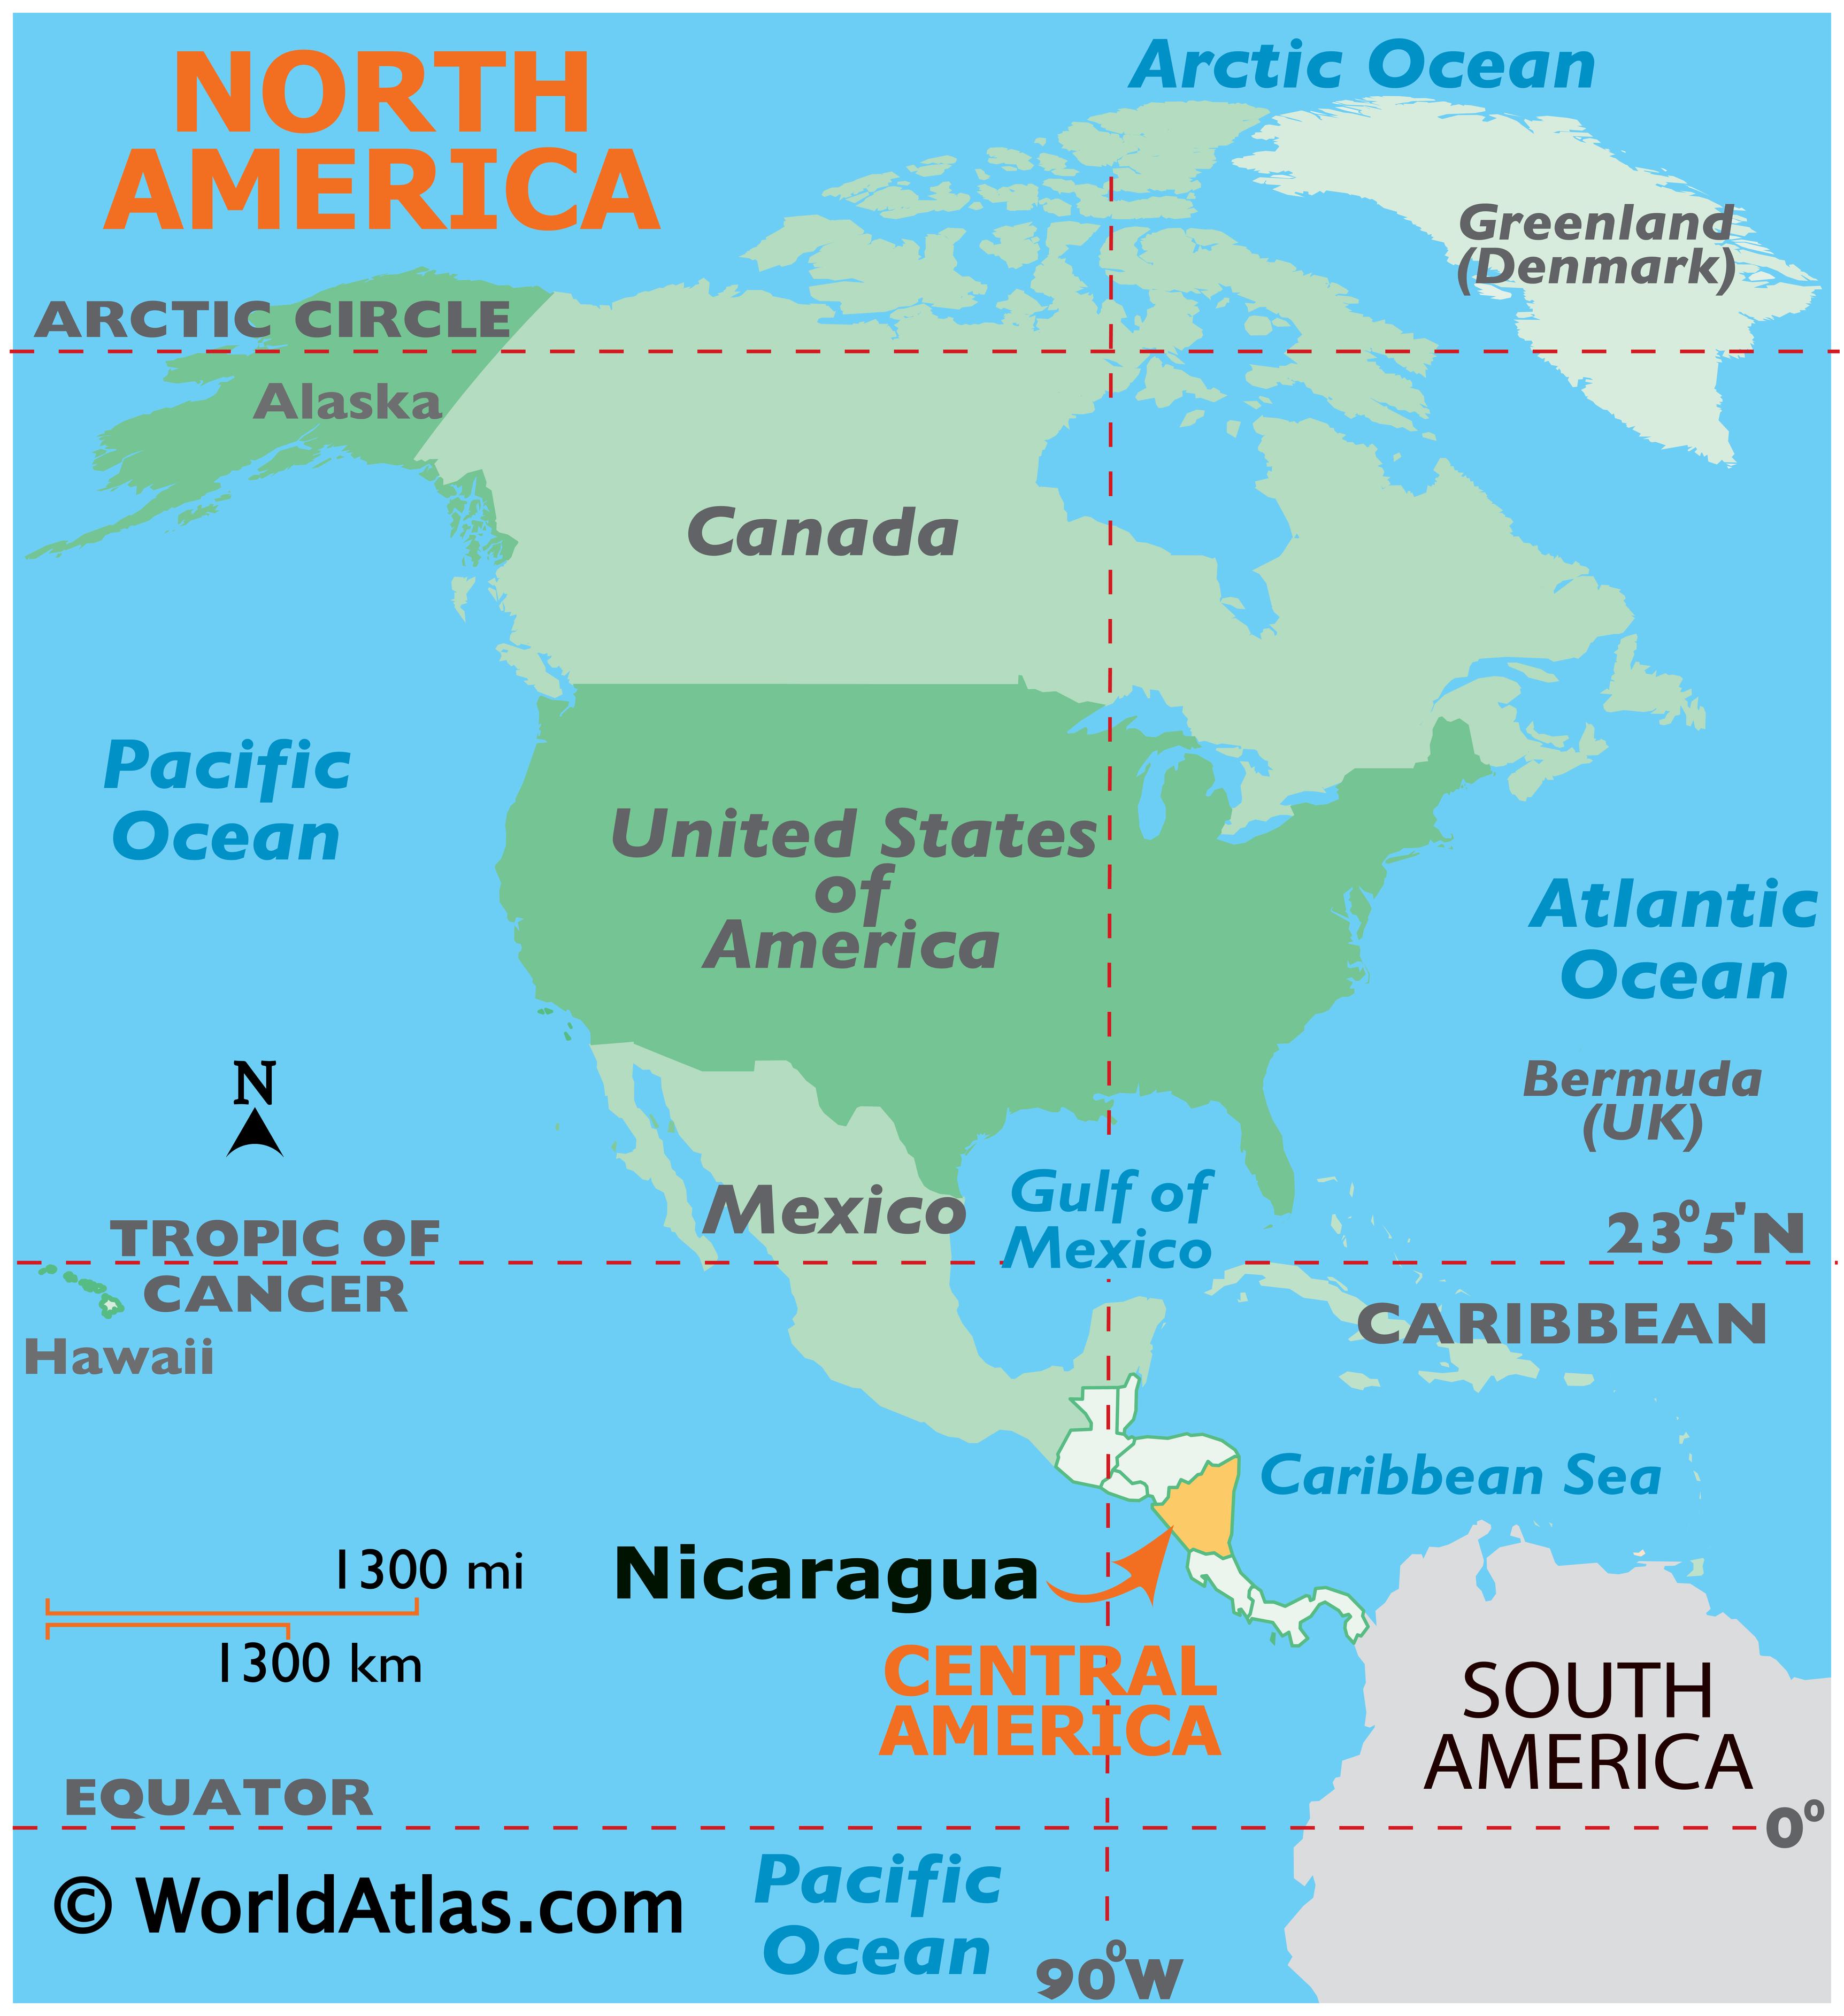 Nicaragua Map Geography Of Nicaragua Map Of Nicaragua